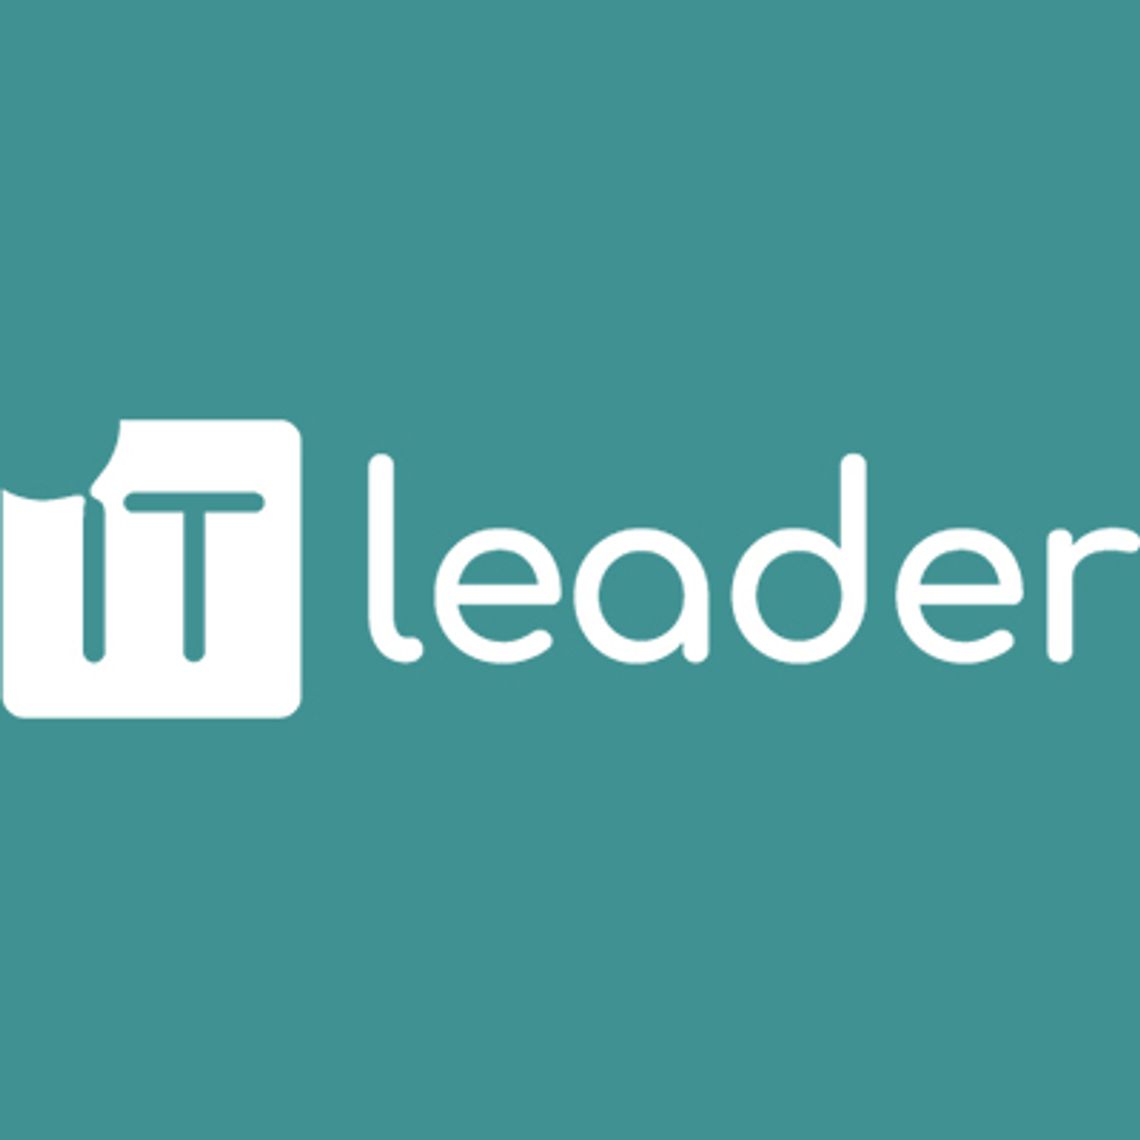 IT Leader - kopie zapasowe dla firm